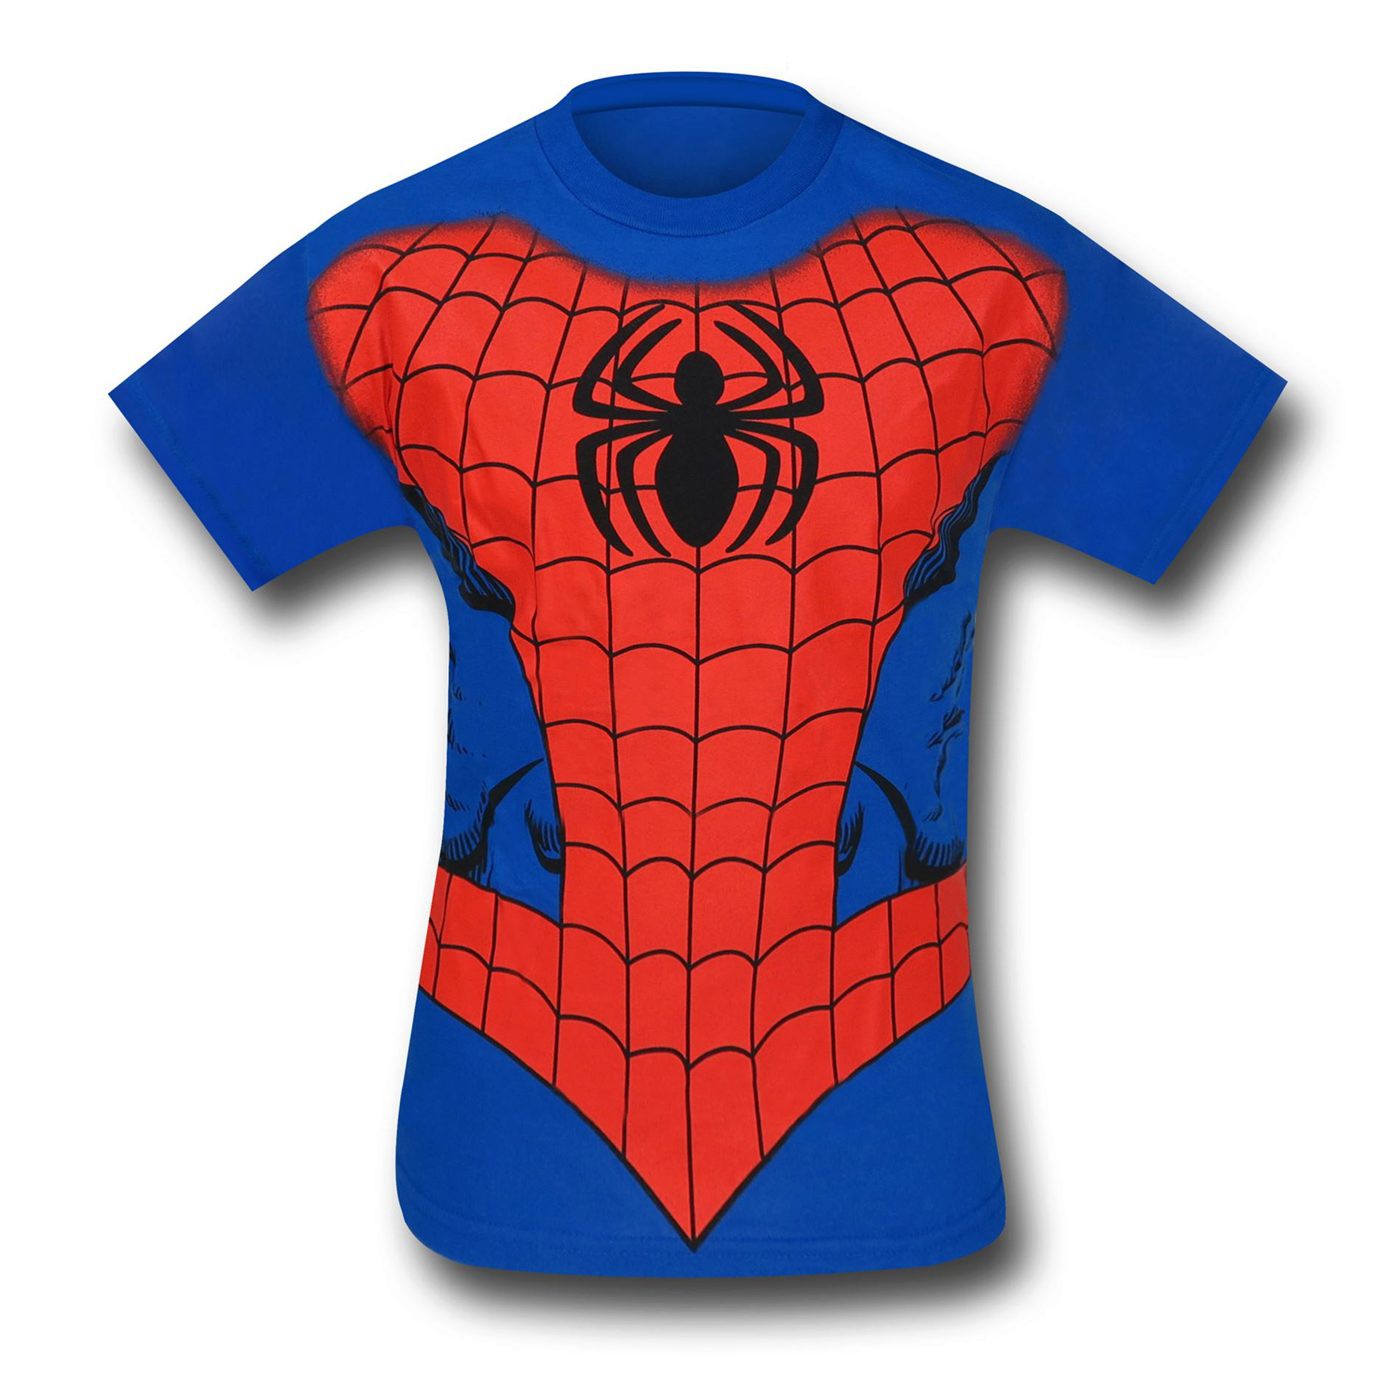 Spiderman Costume T-Shirt